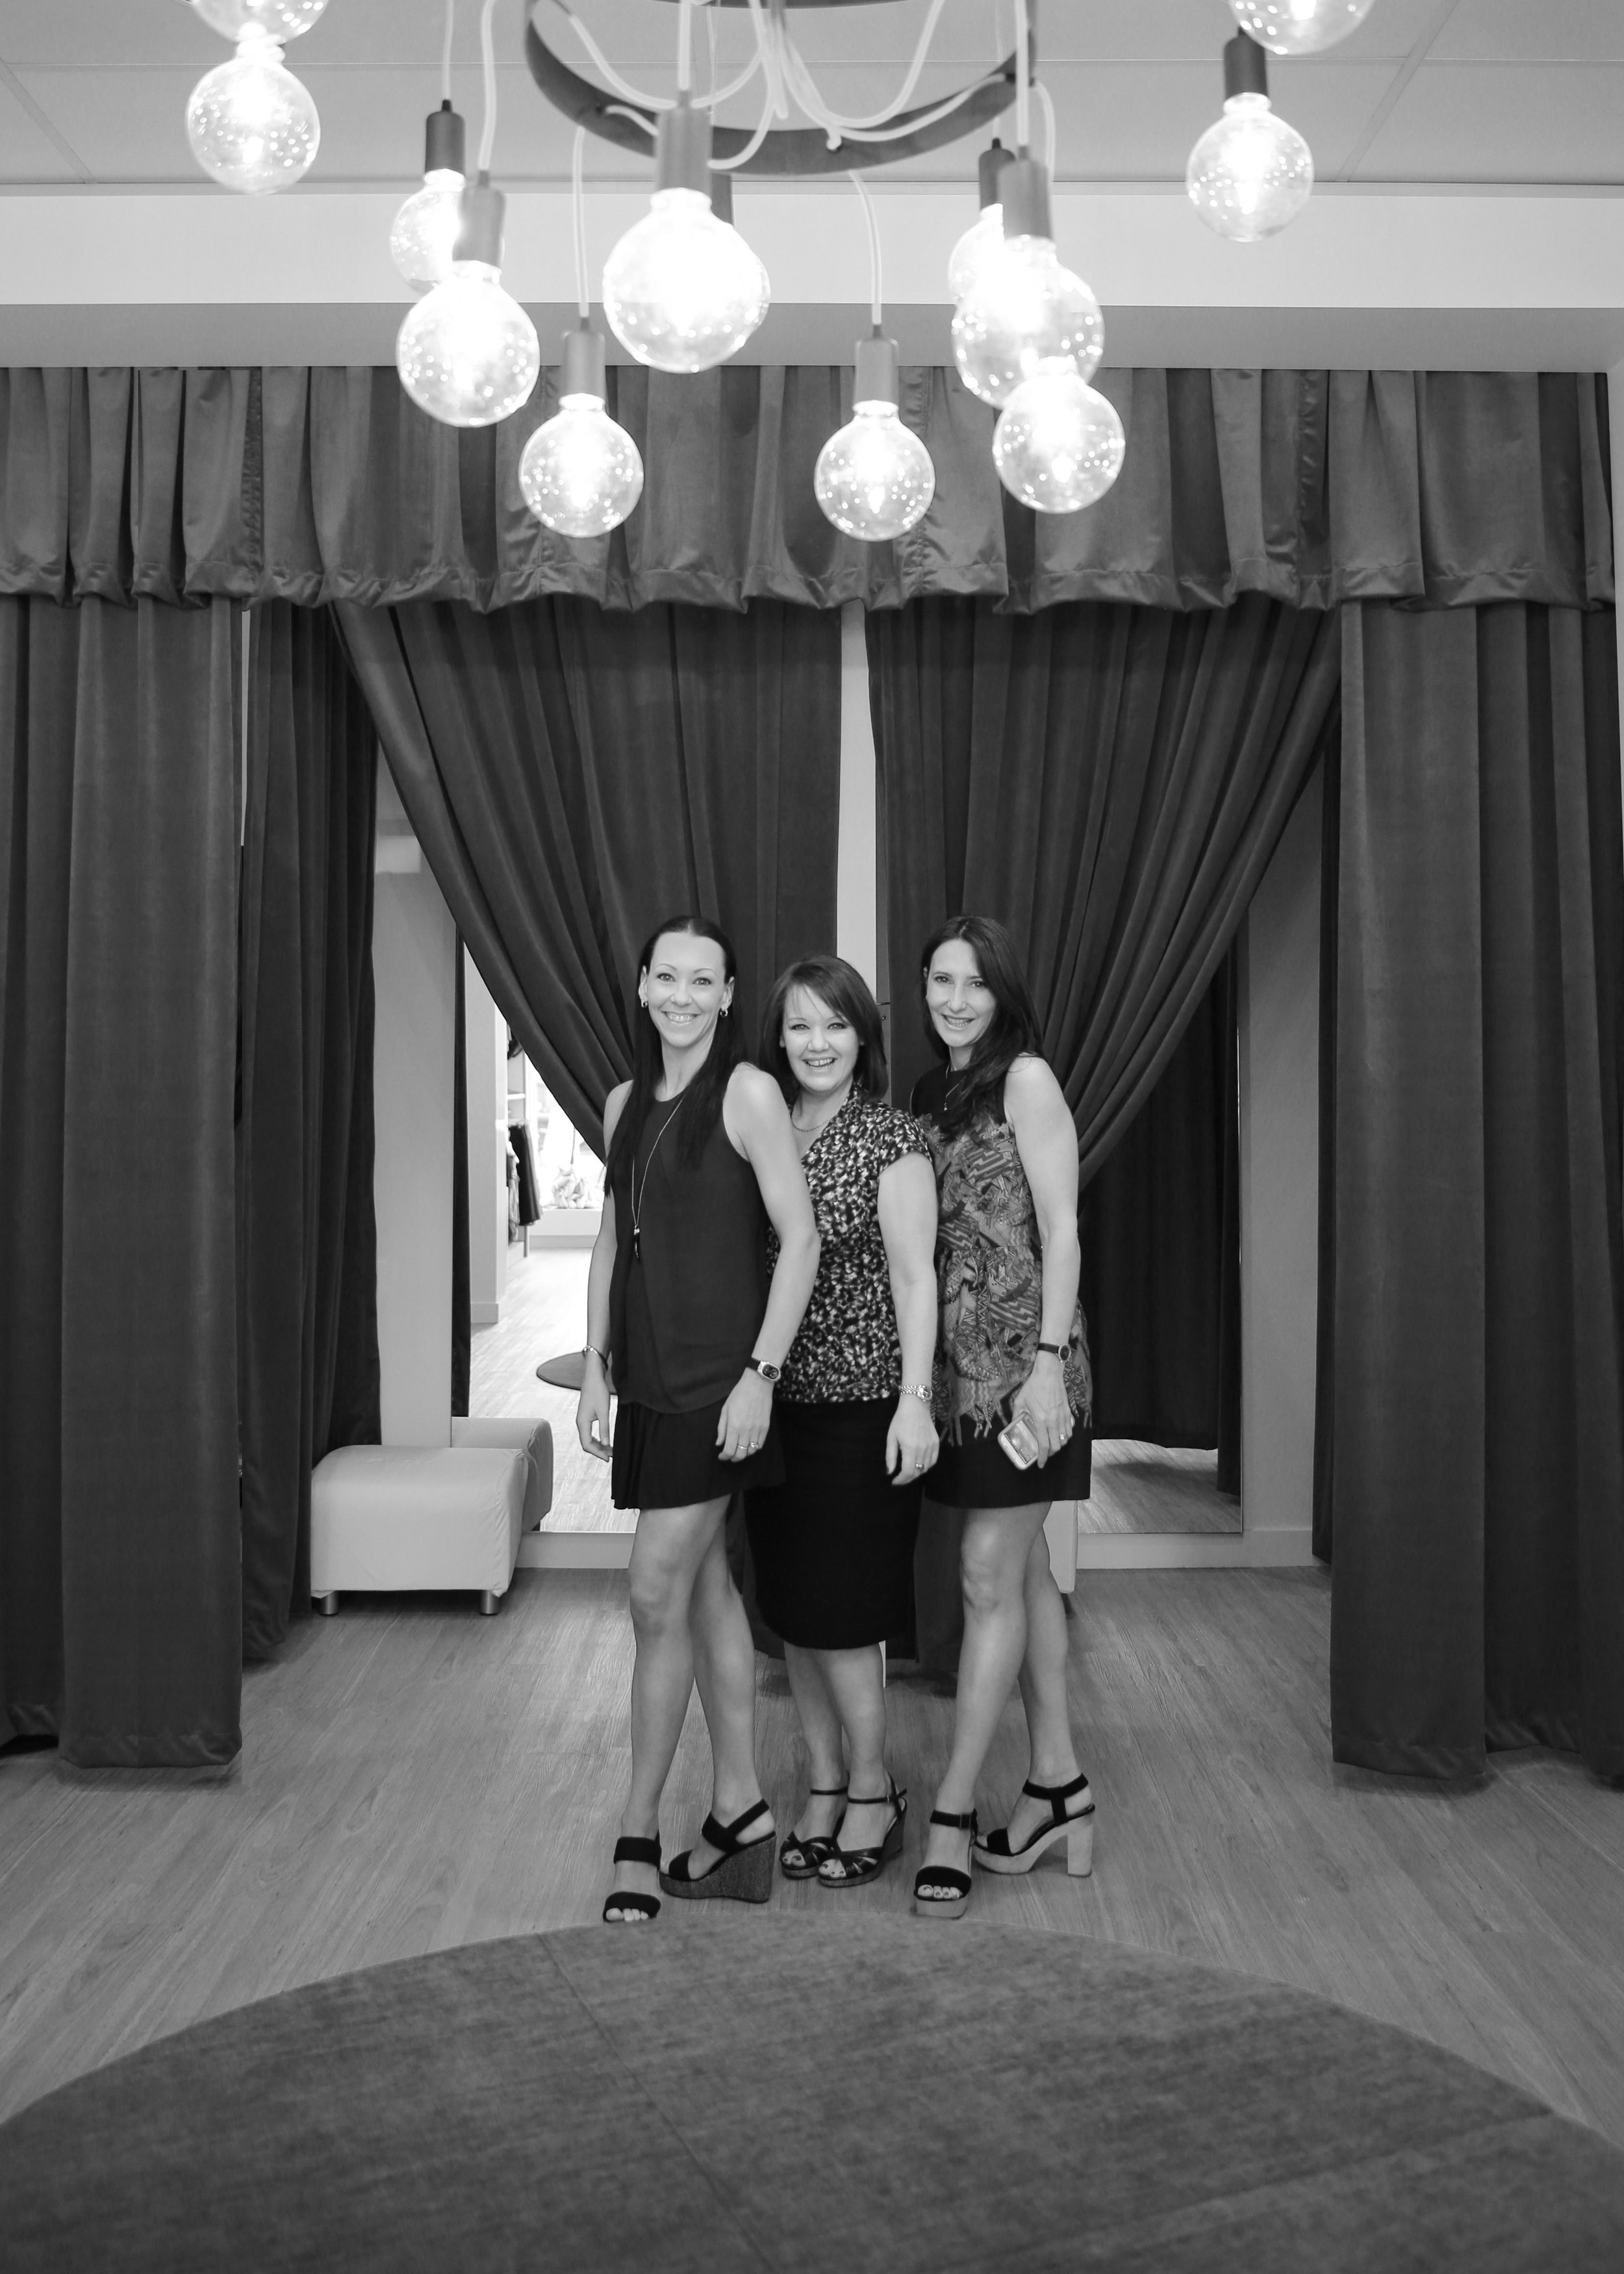 Lynda, Gail and Karen at the opening of Energetiks Ivanhoe